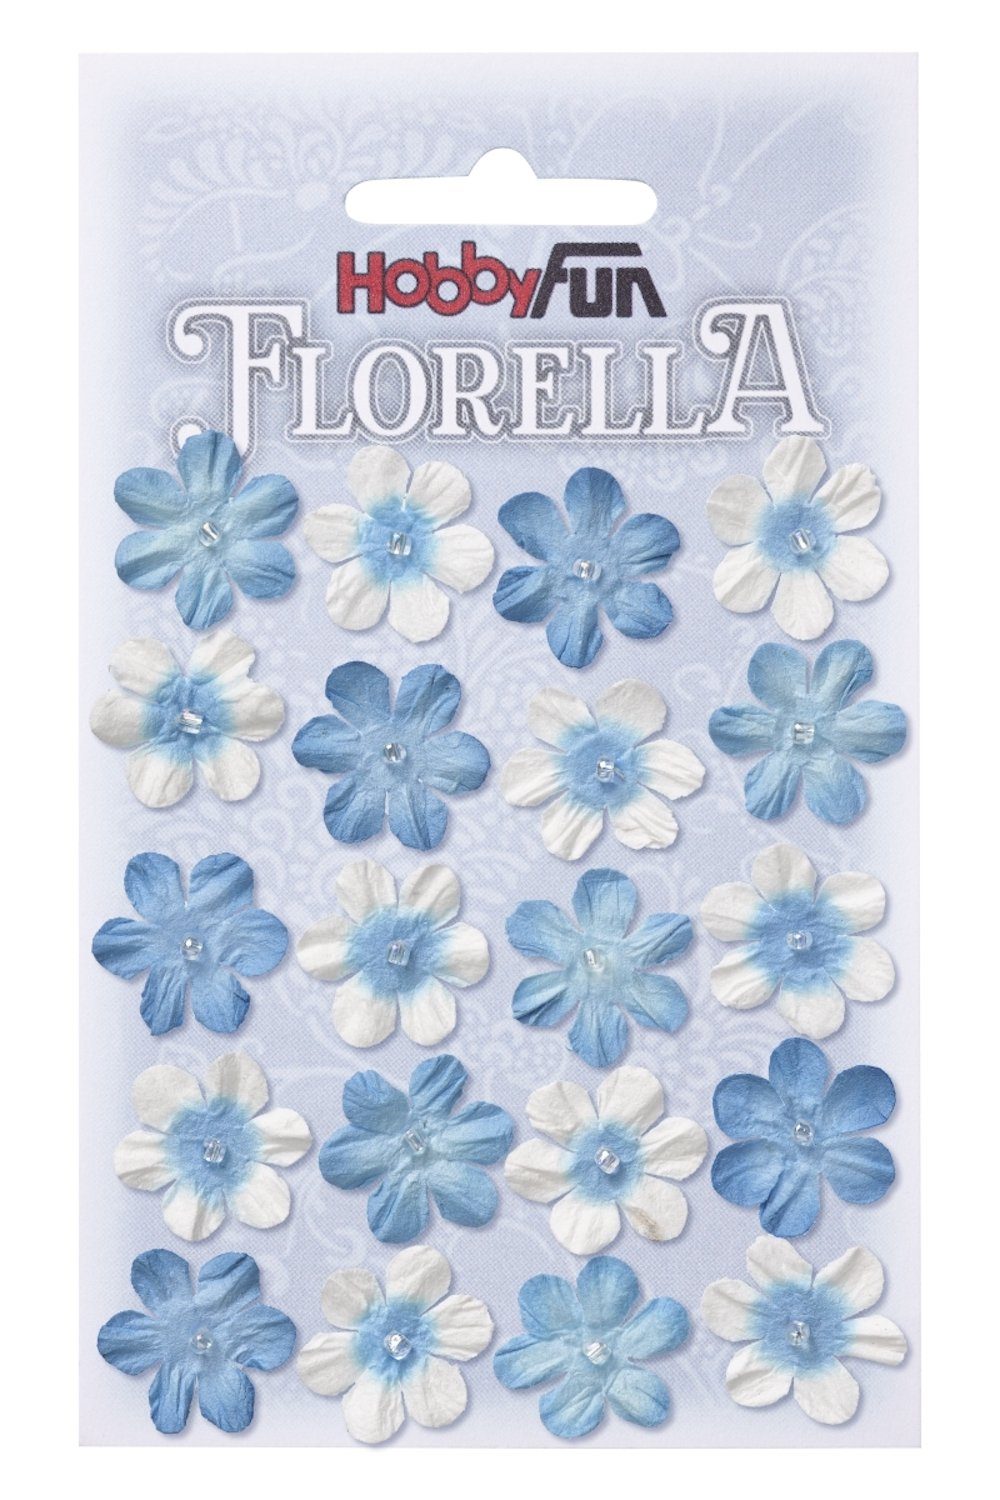 HobbyFun Dekofigur FLORELLA-Blüten blau, 2 B Maulbeer-Papier, cm, aus